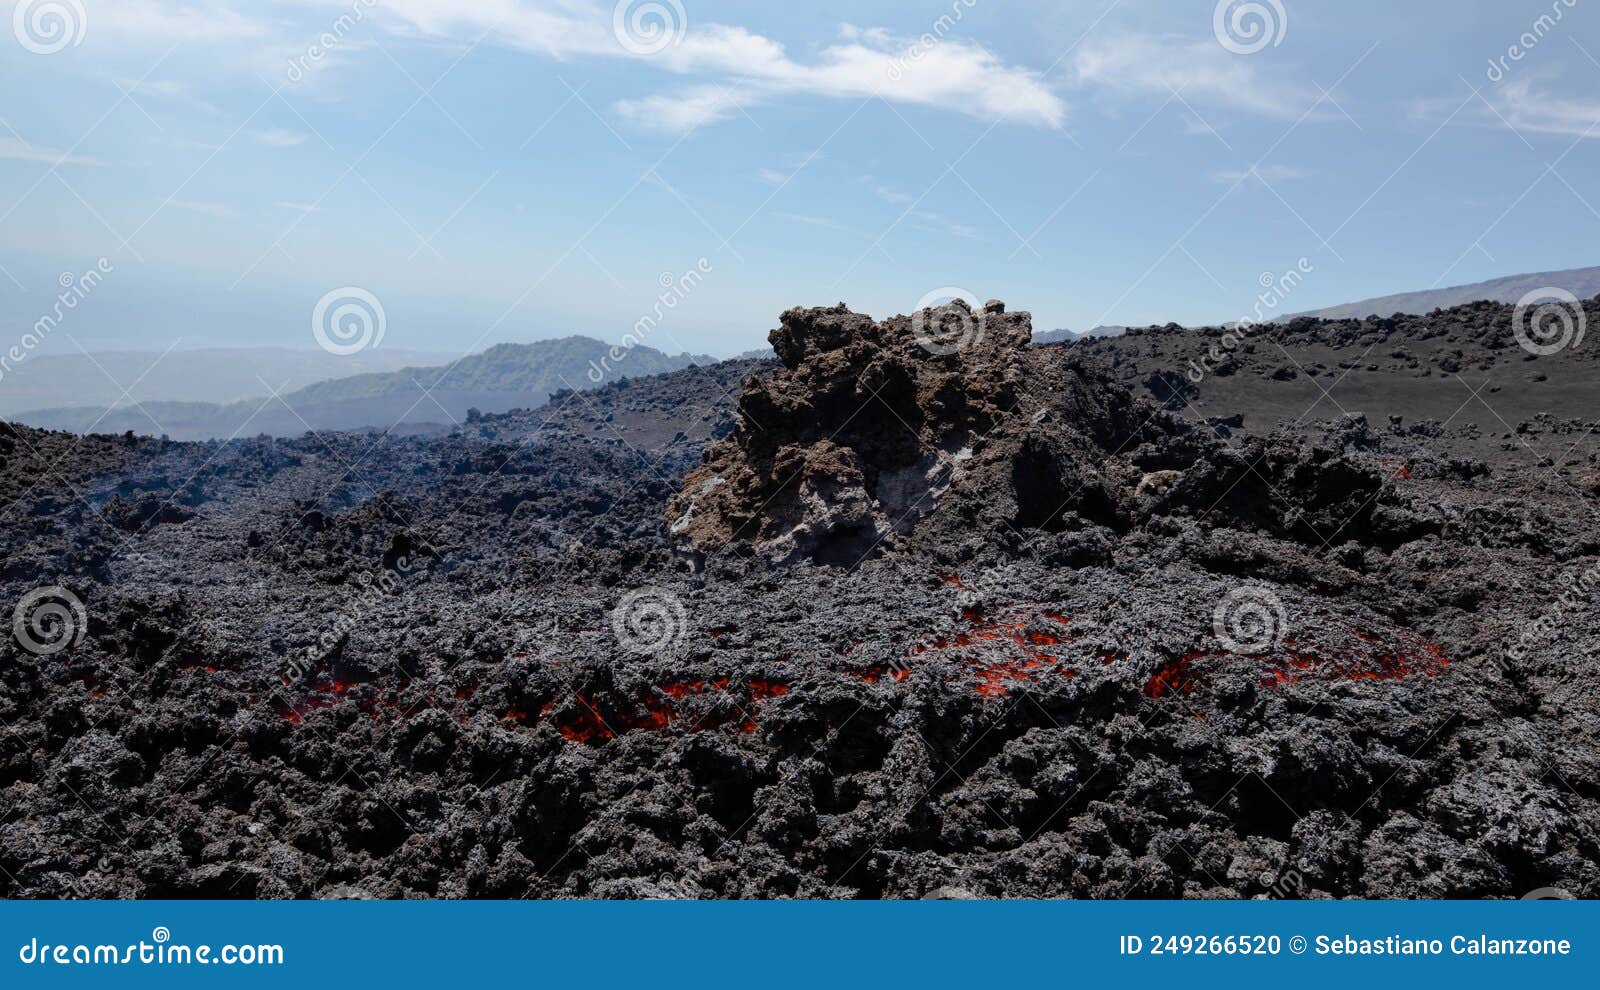 etna - lava flow detail  touristic attractions in sicily taken 7june 2022